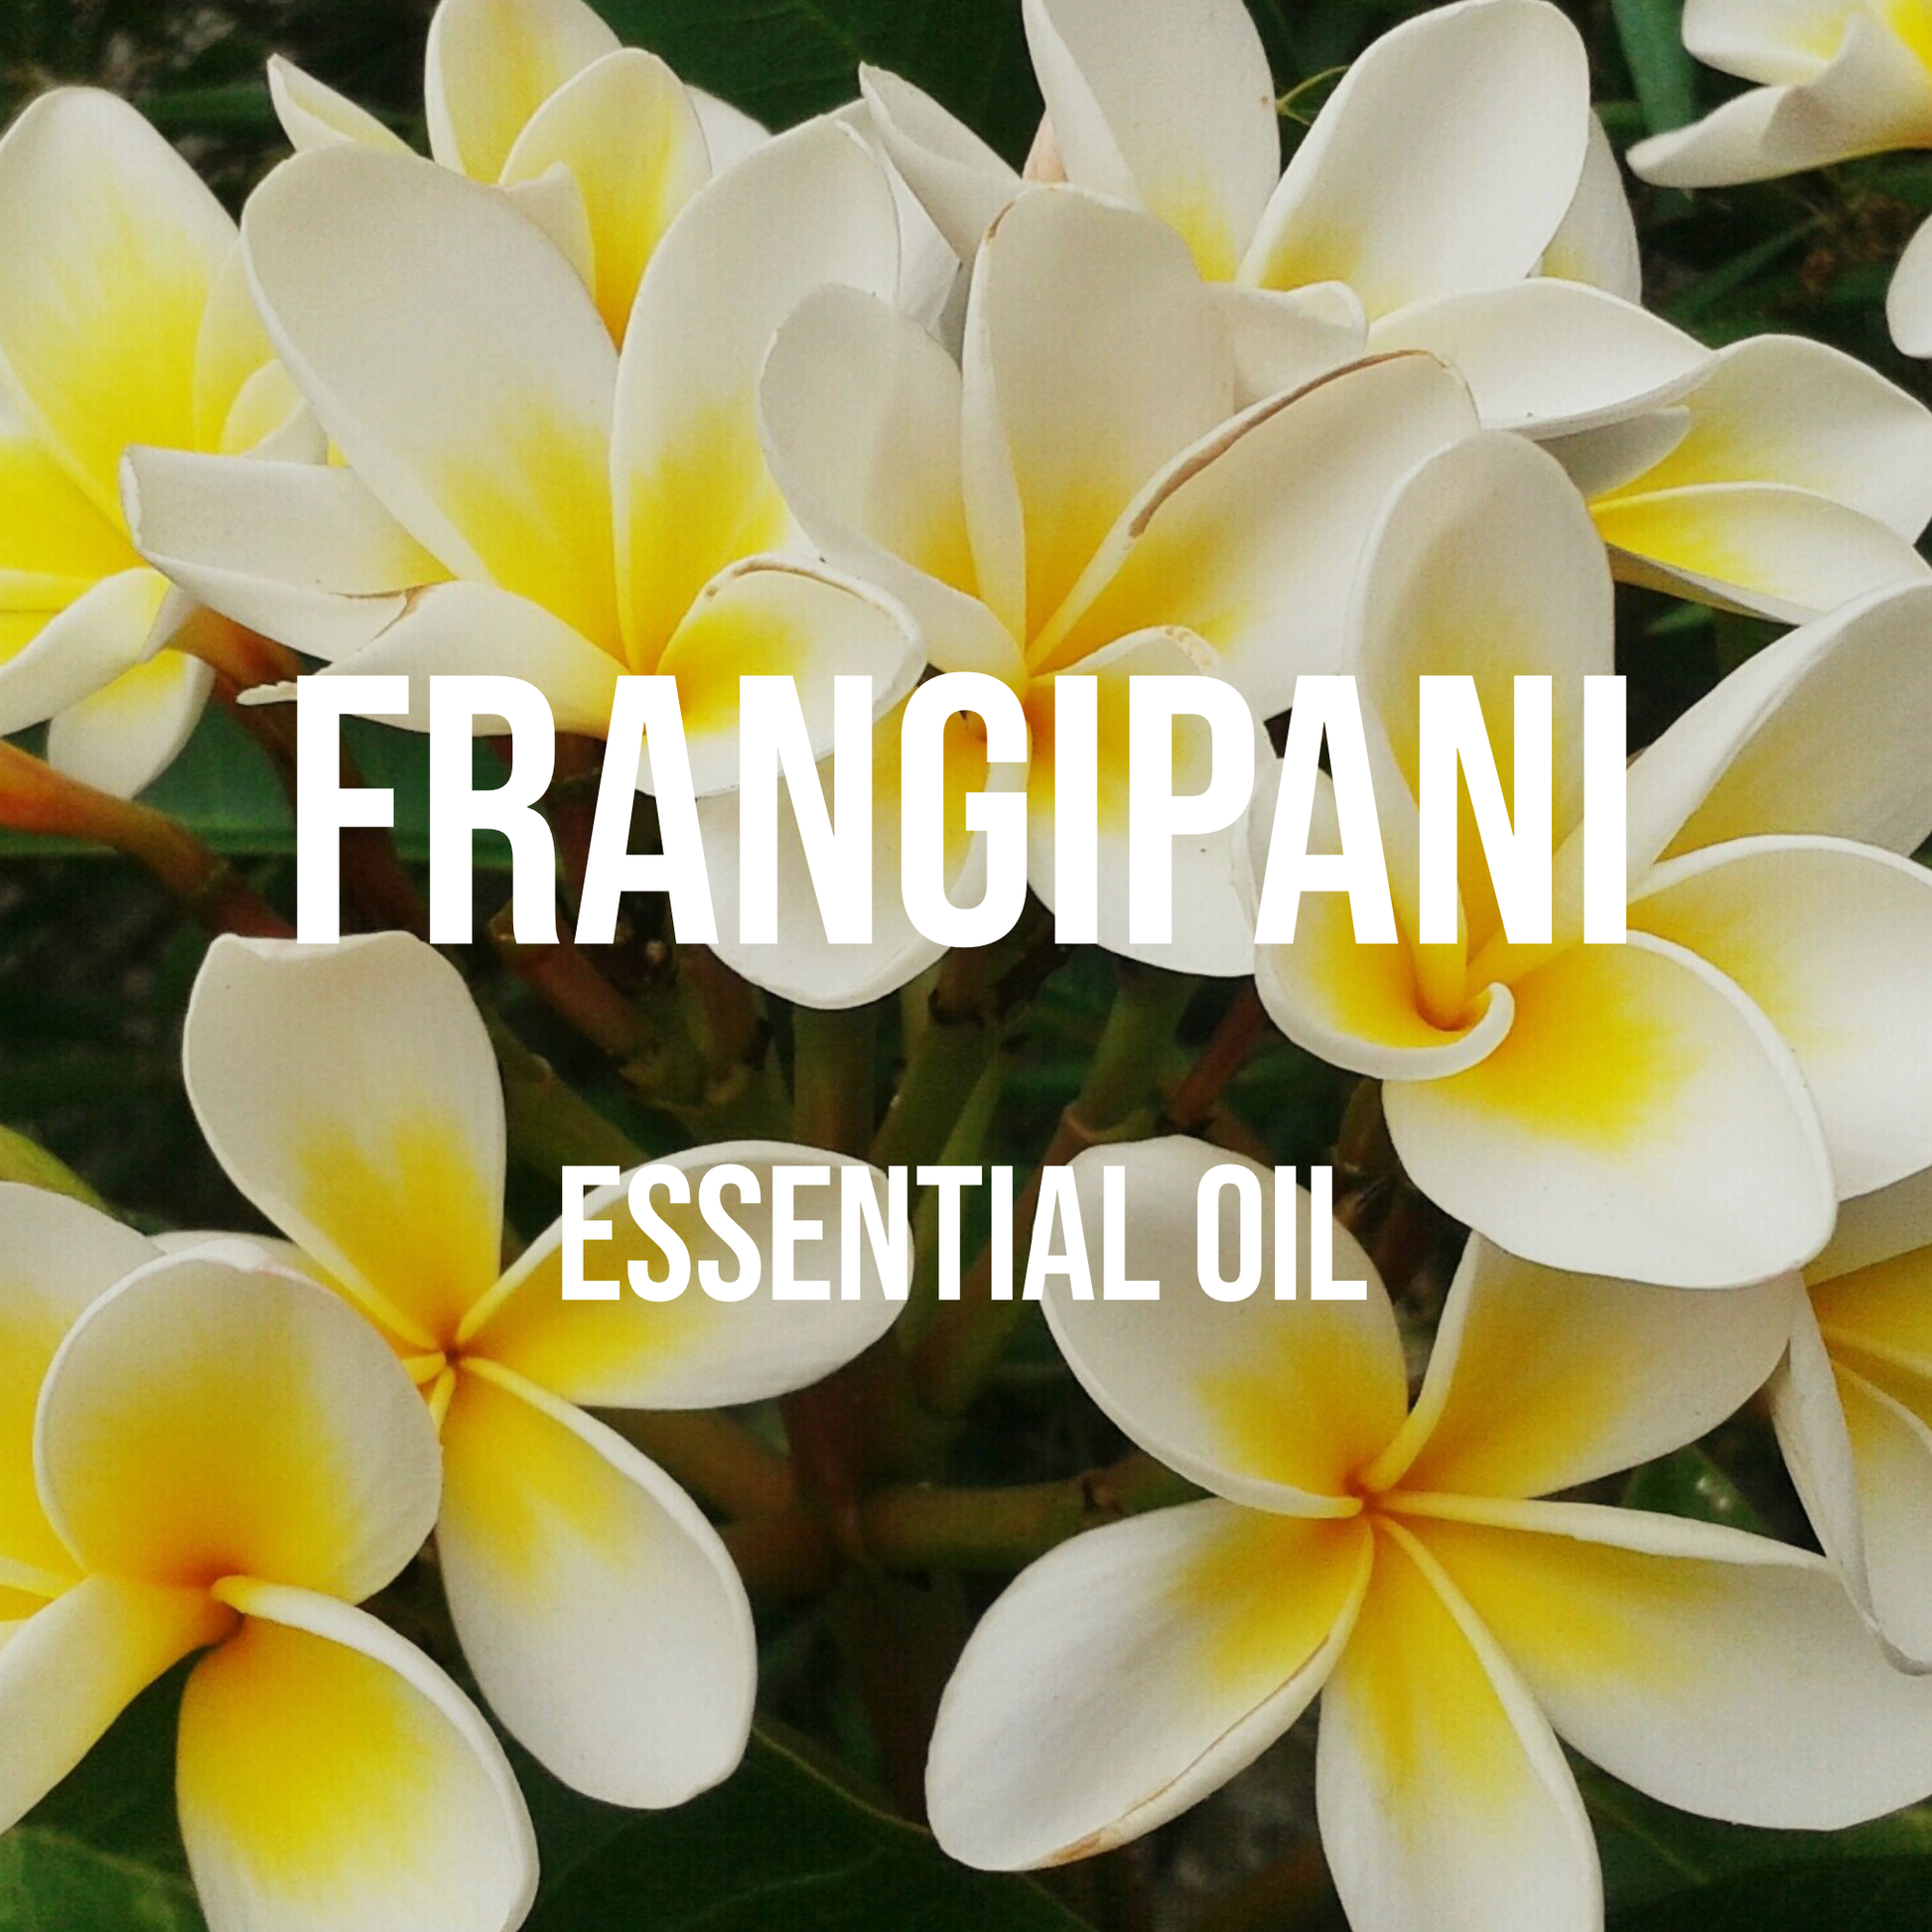 Frangipani (Plumeria) Essential Oil 5% Dilution